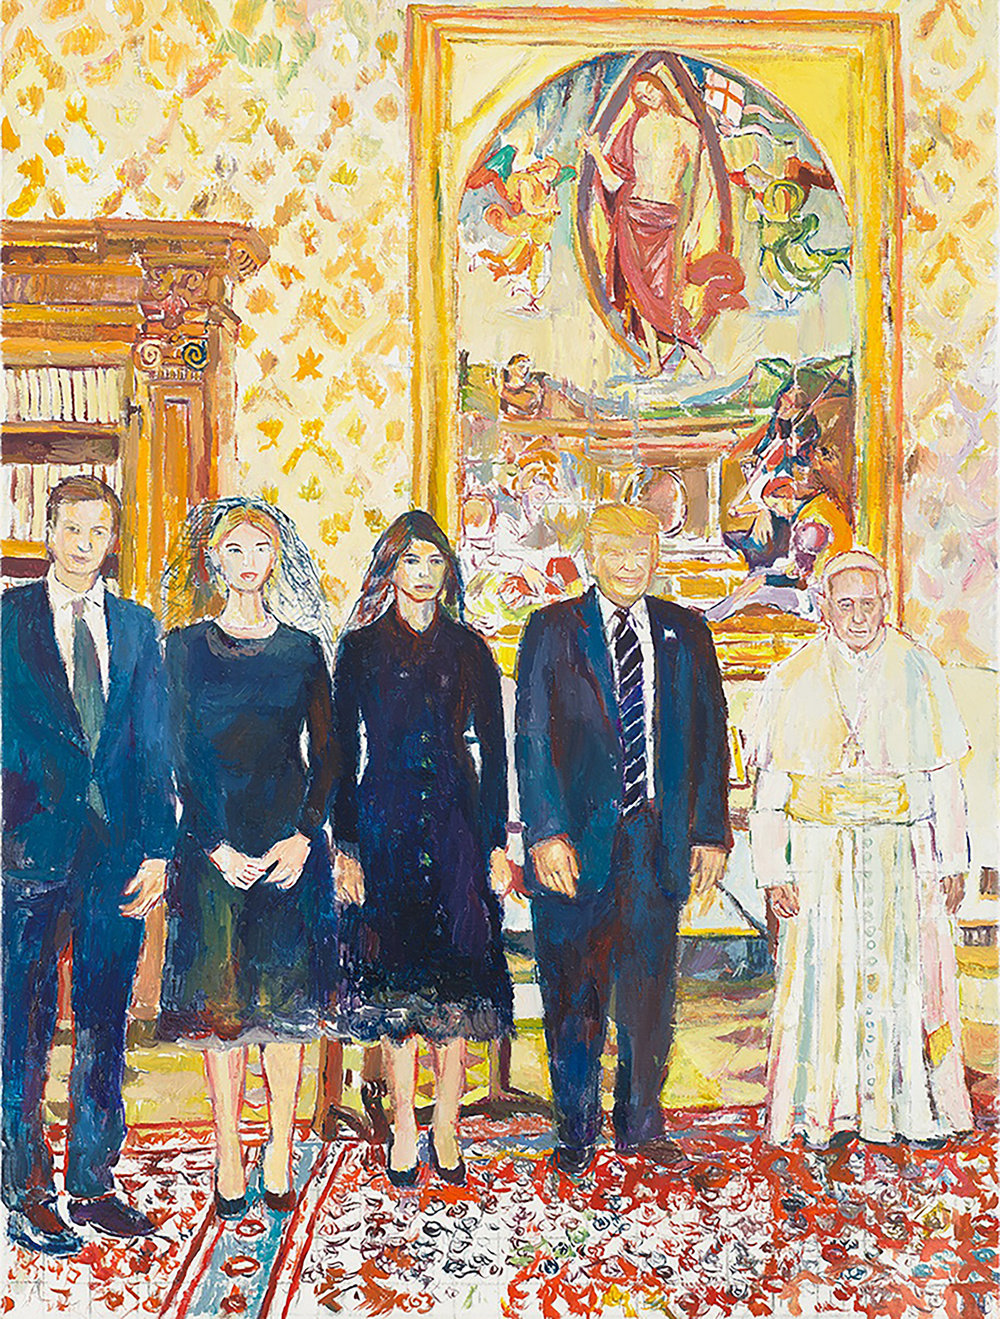 Mayerson, resurrection (trumps meet the pope), 2017, oil on linen, 29 x 22 in., 73.66 x 55.88 cm, cnon 59.456